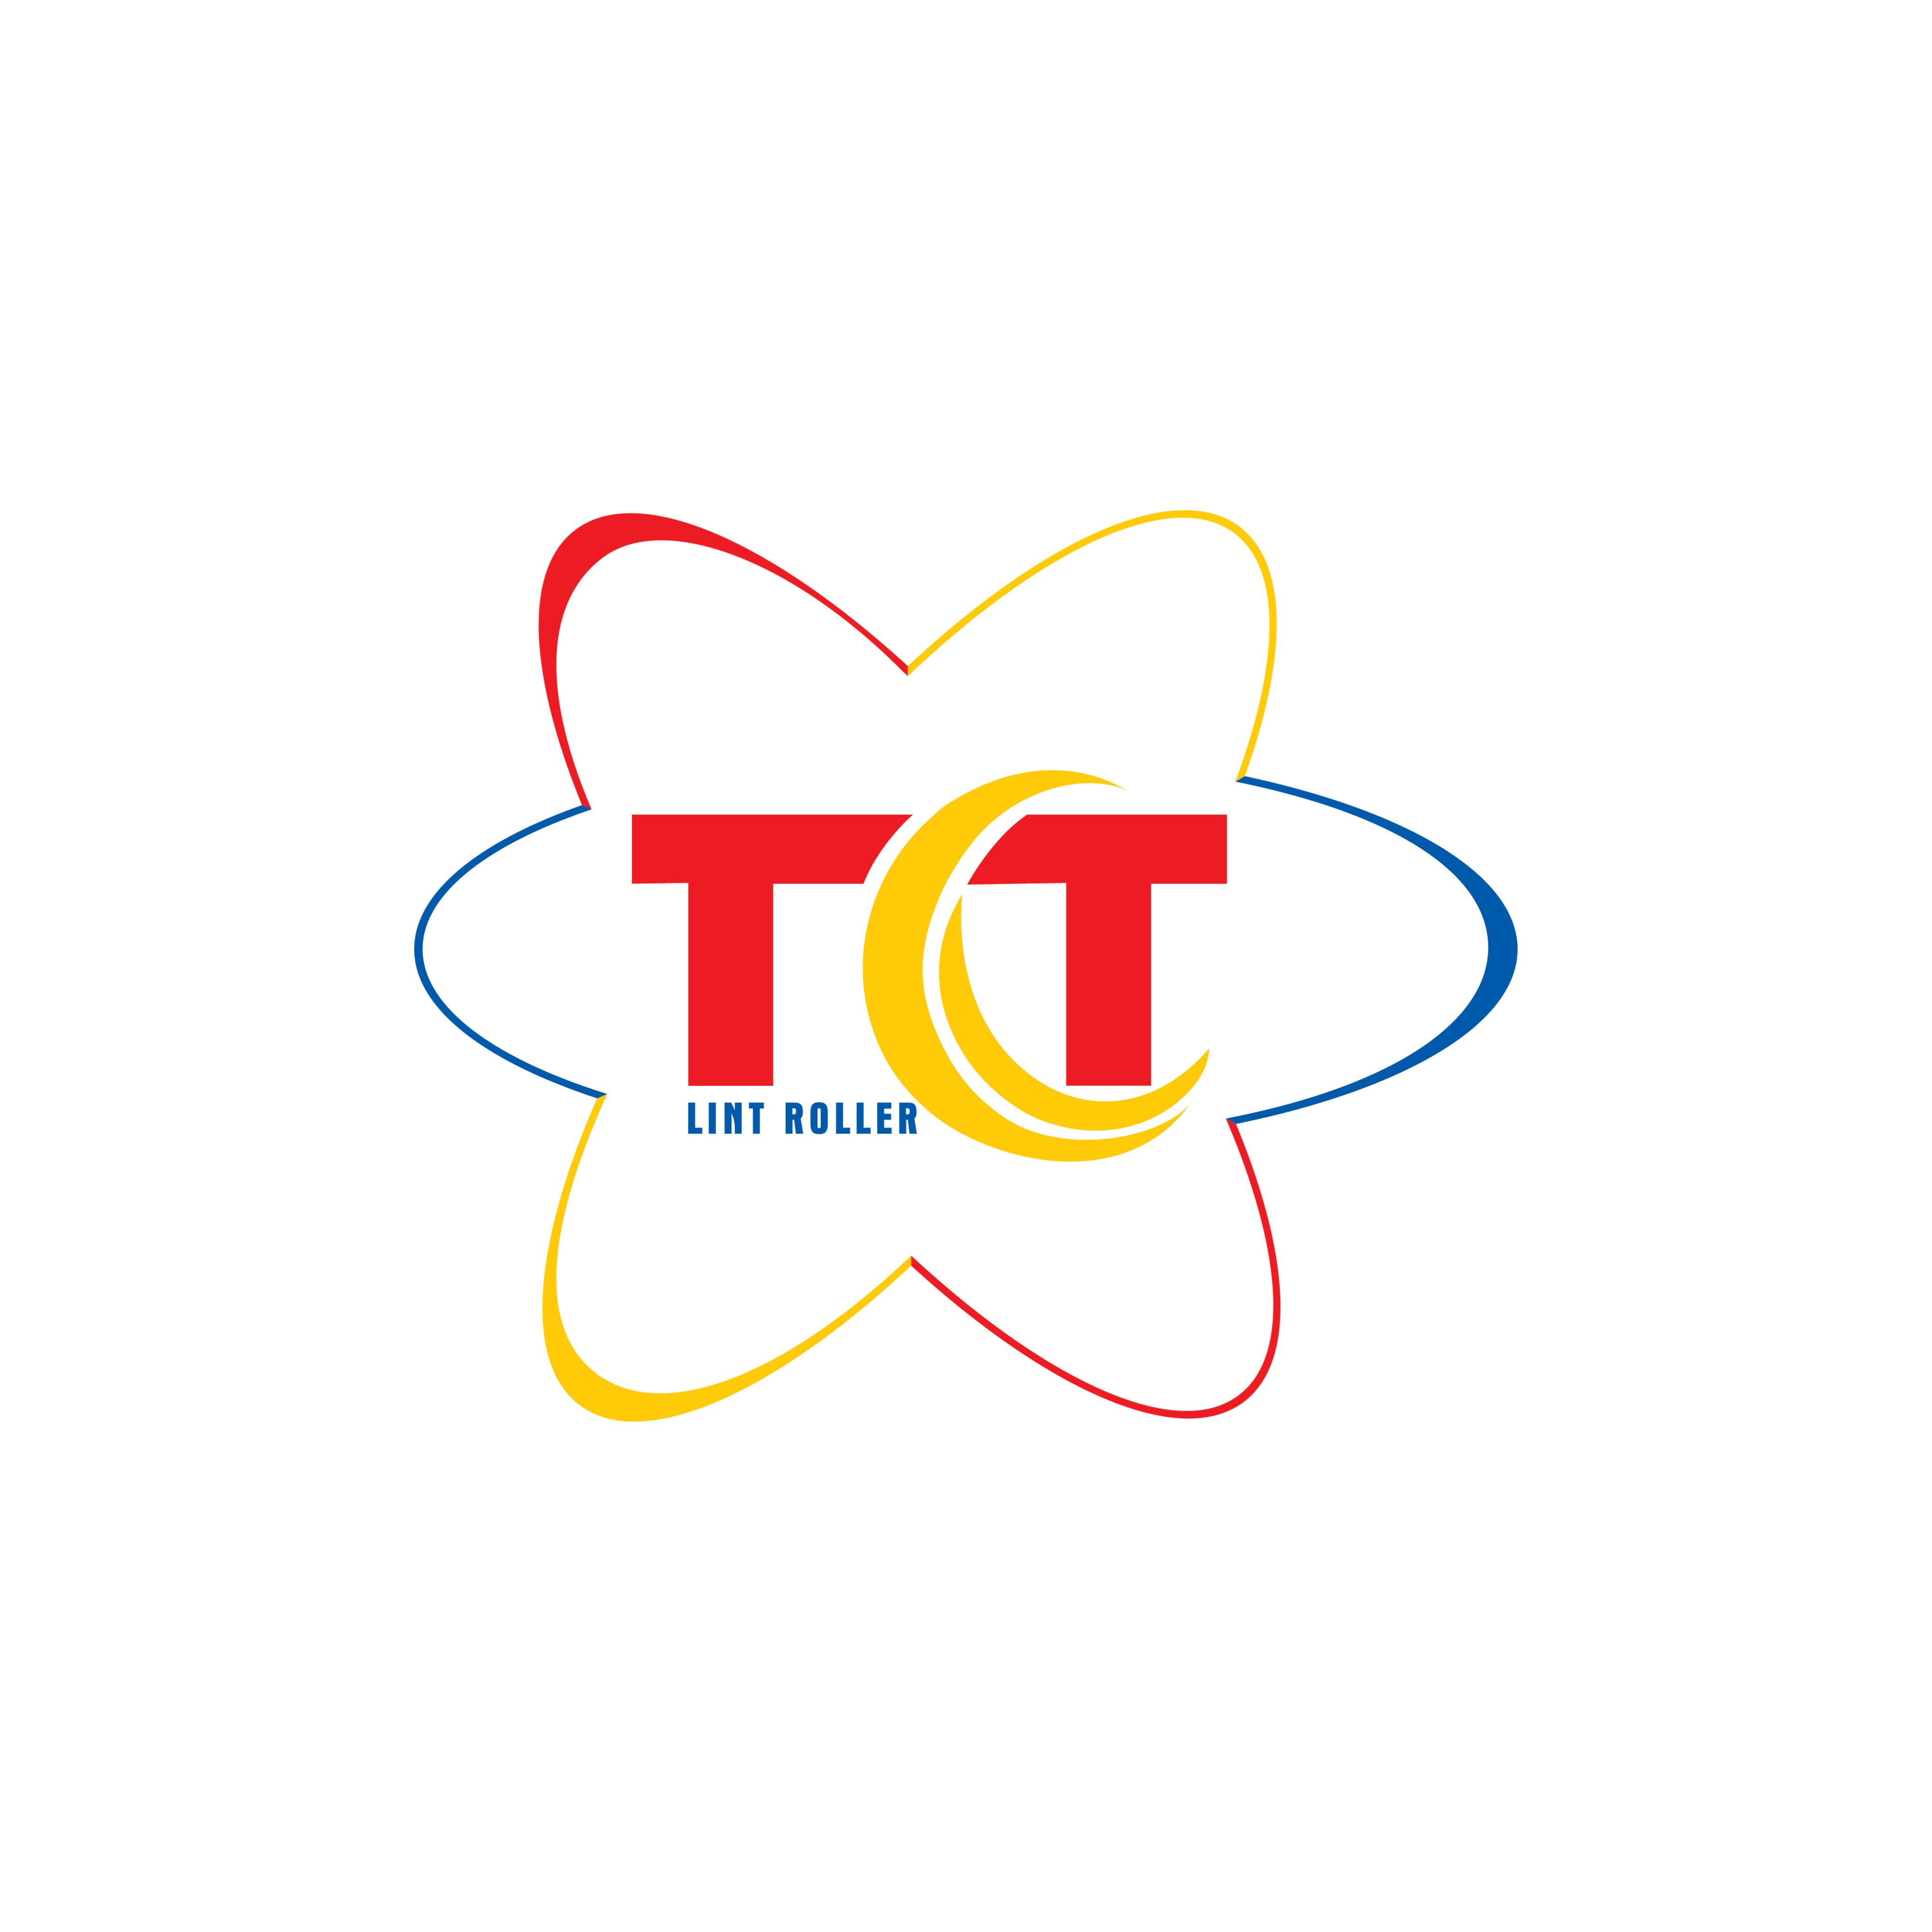 TCT Lintroller